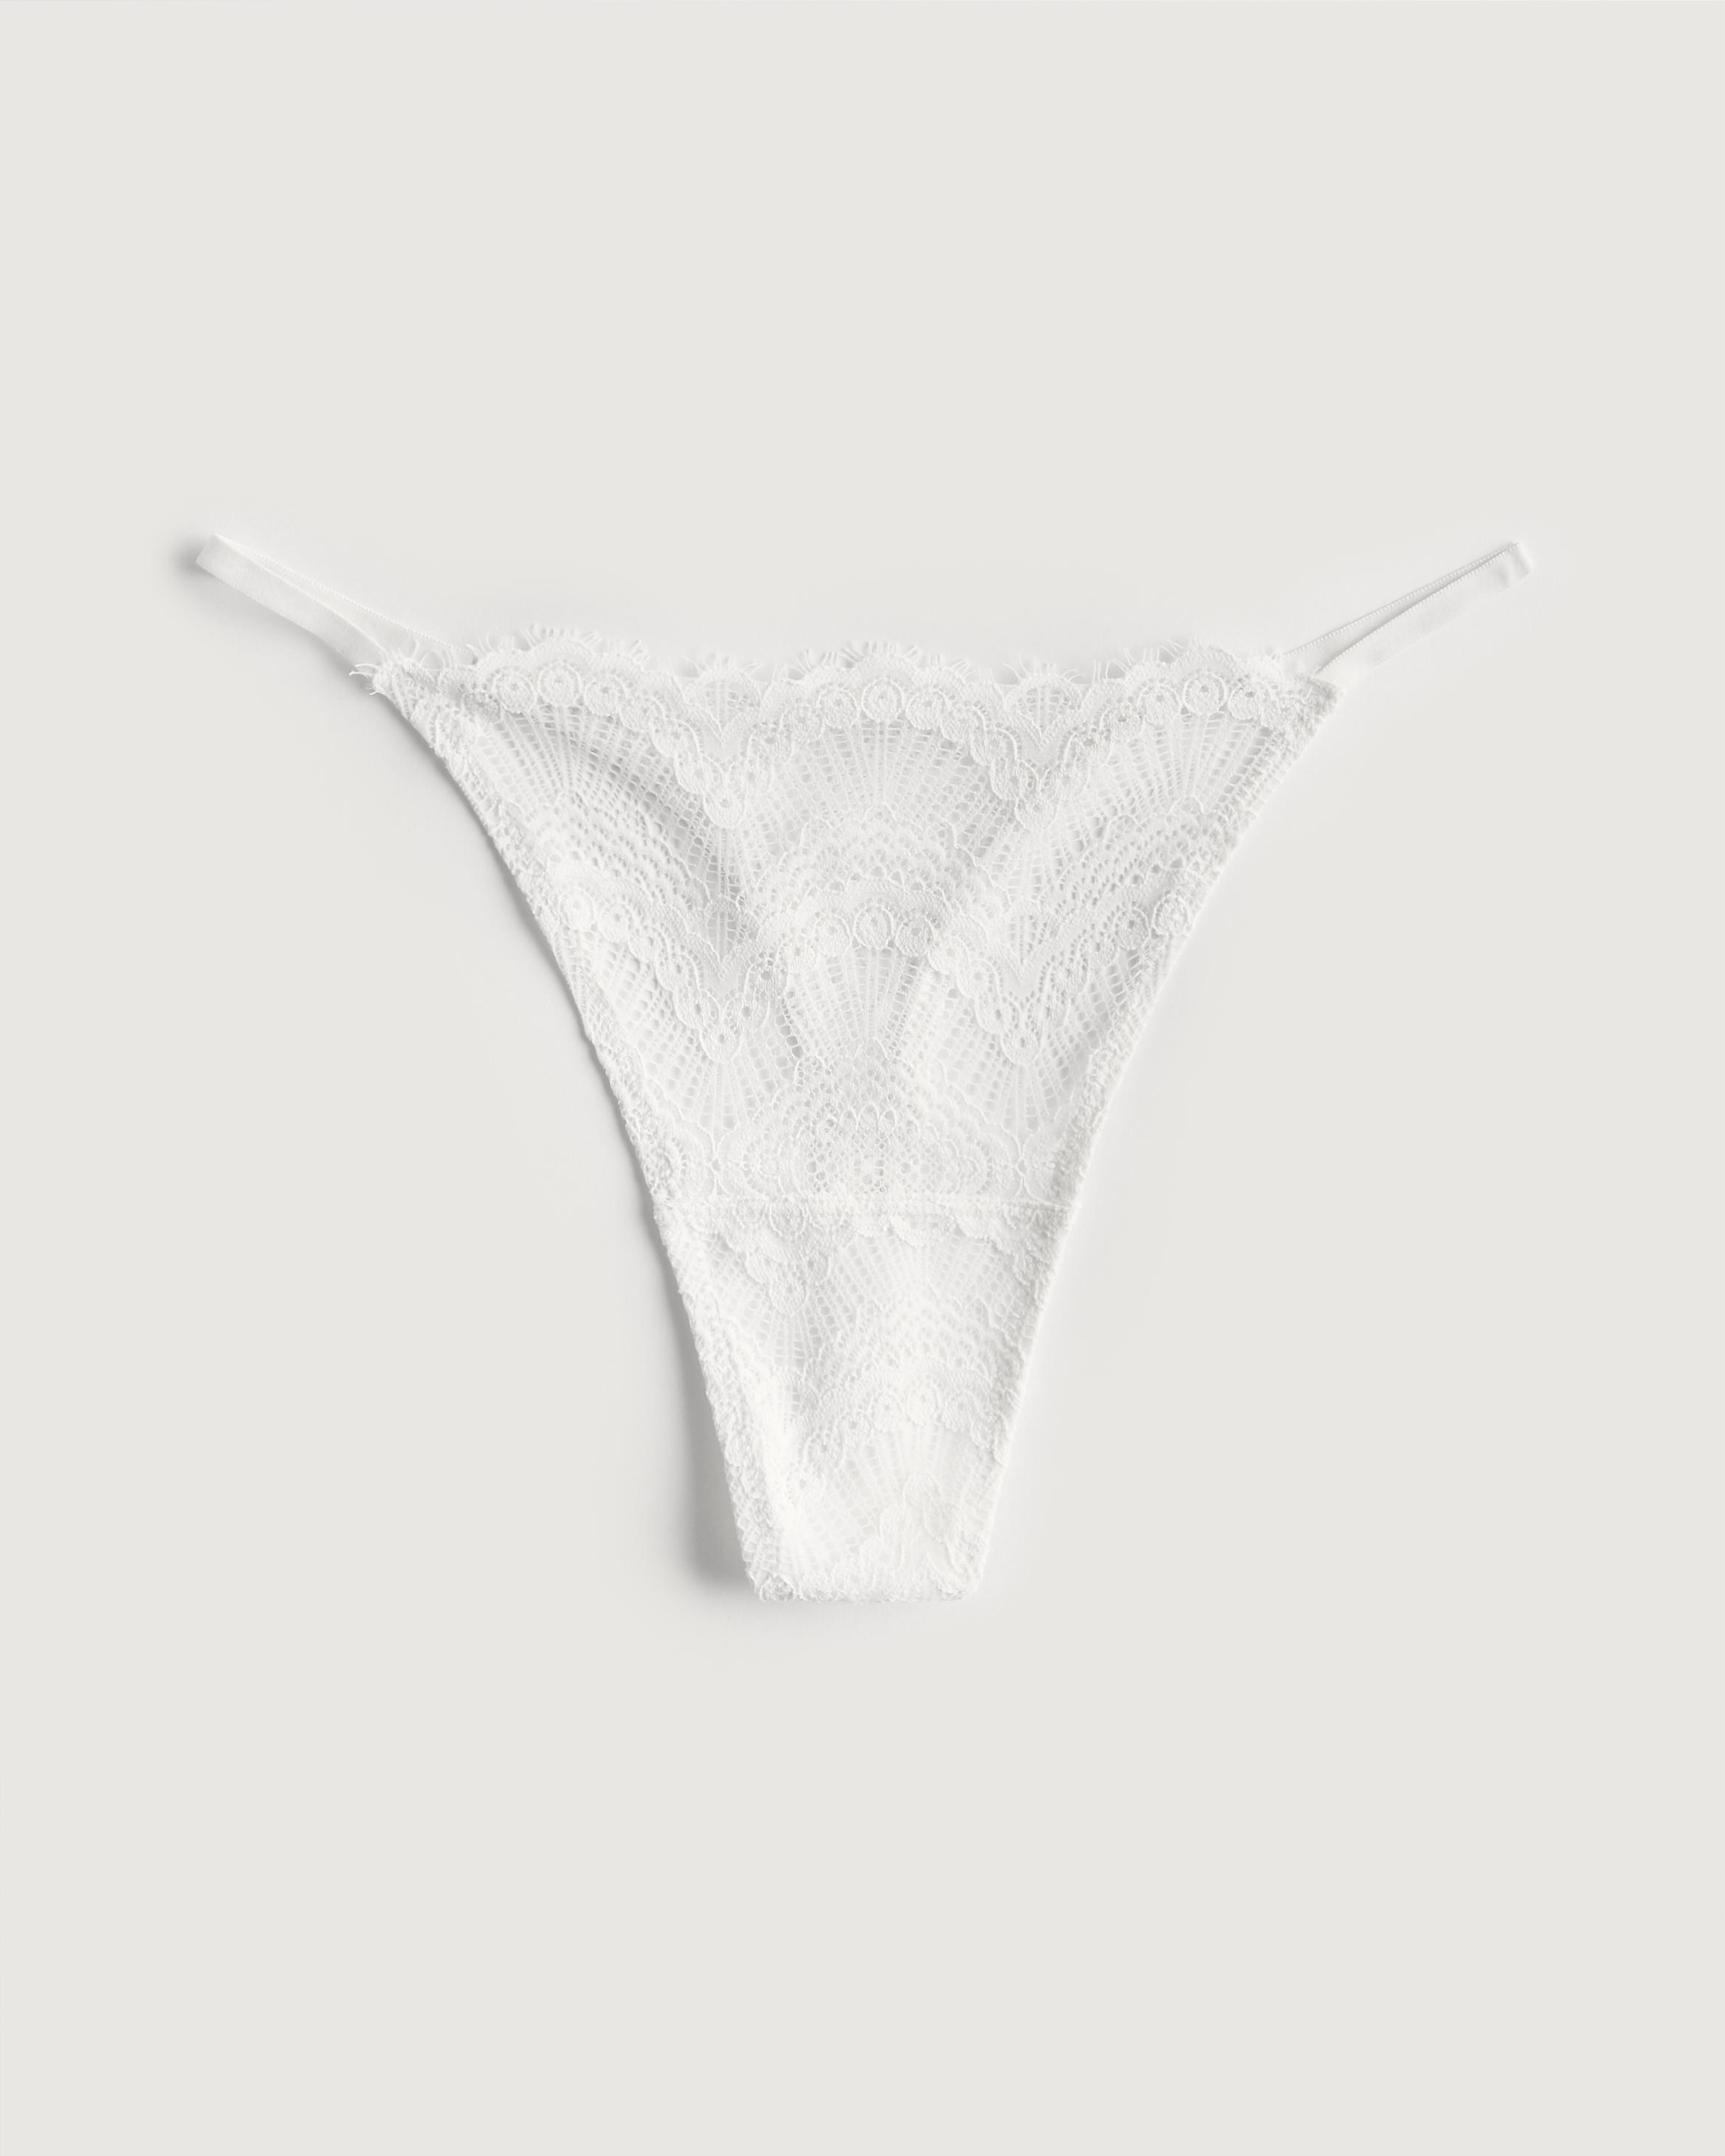 Hollister Gilly Hicks G-String Thong Underwear